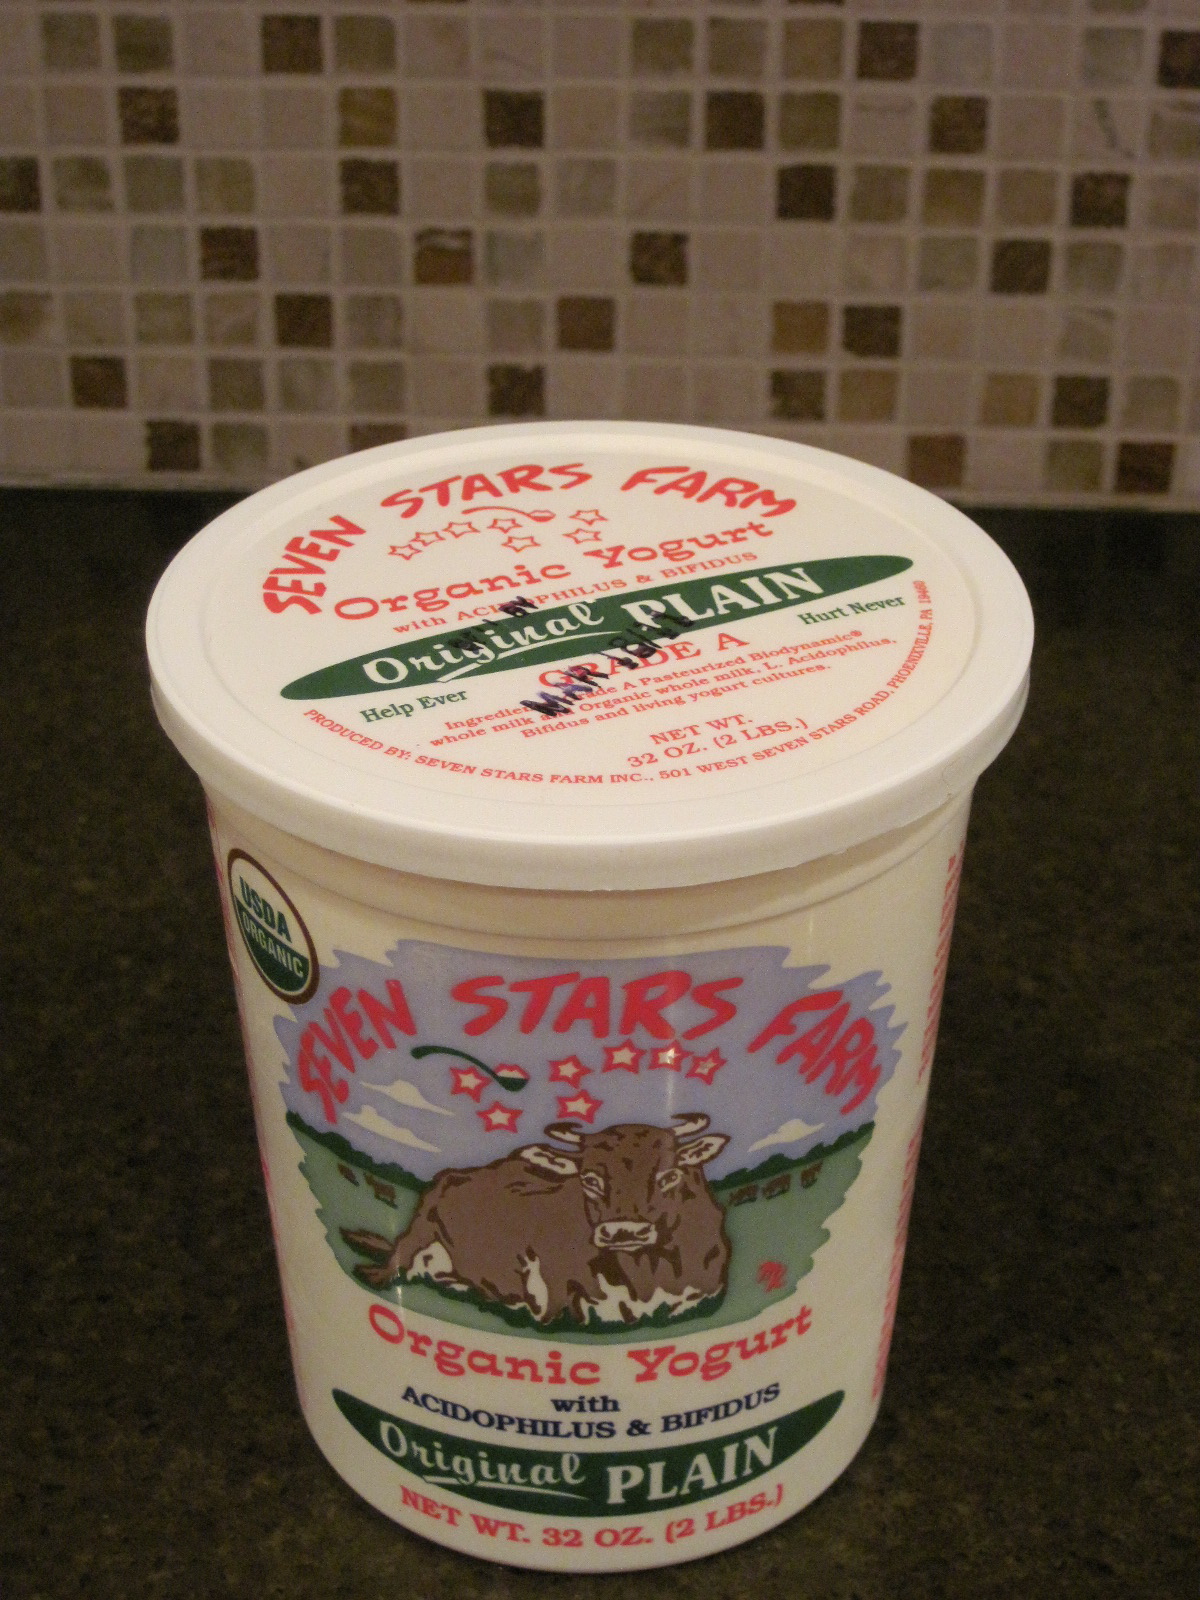 Seven+stars+yogurt